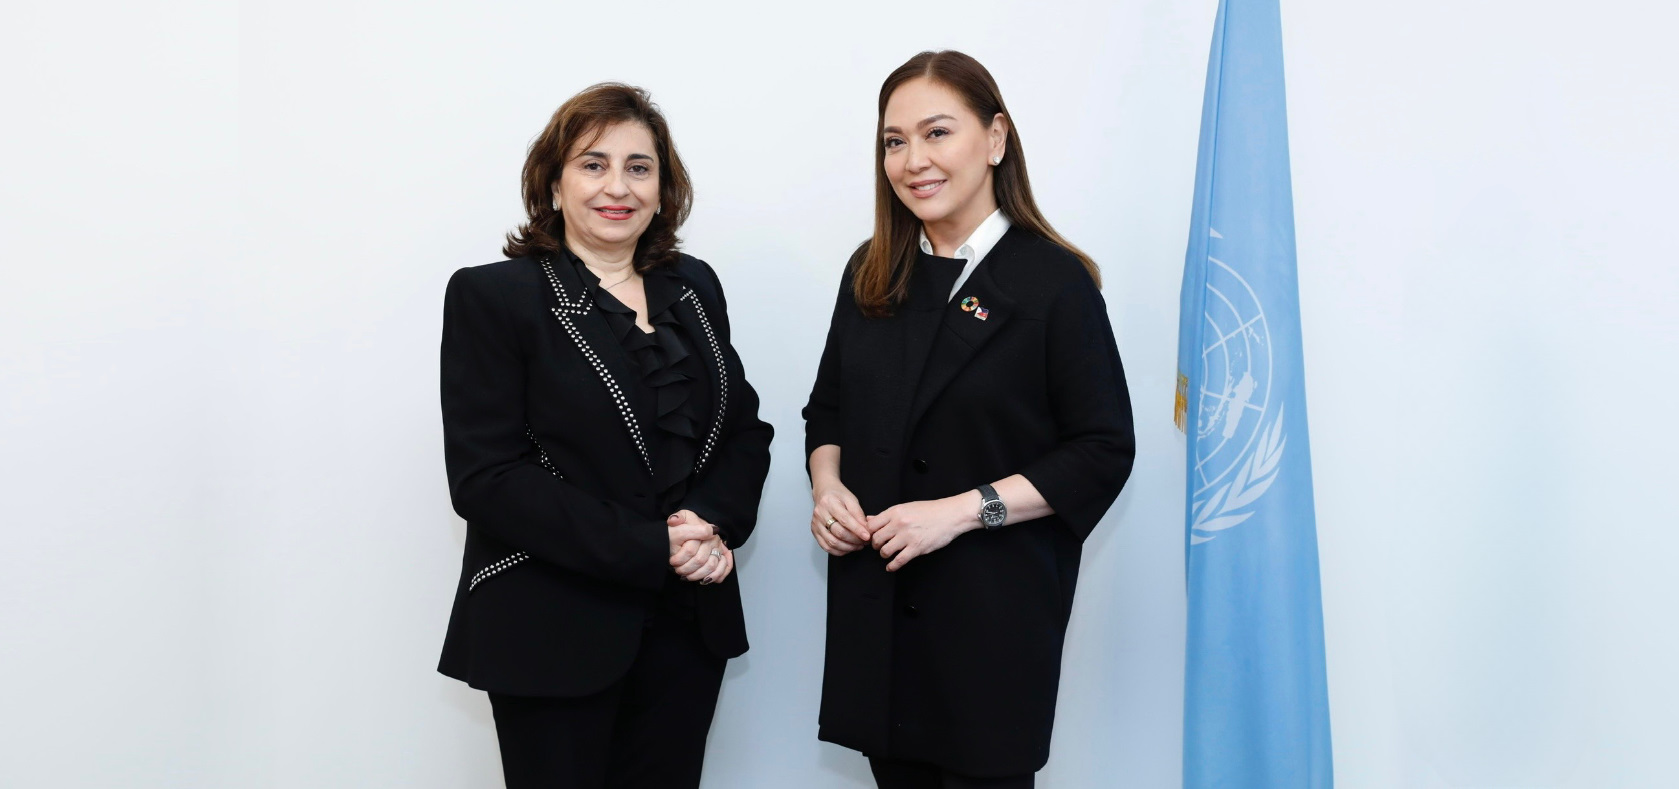 UN Women Executive Director Sima Bahous and UN Women National Goodwill Ambassador for the Philippines, Karen Davila, at UN Women headquarters in New York.